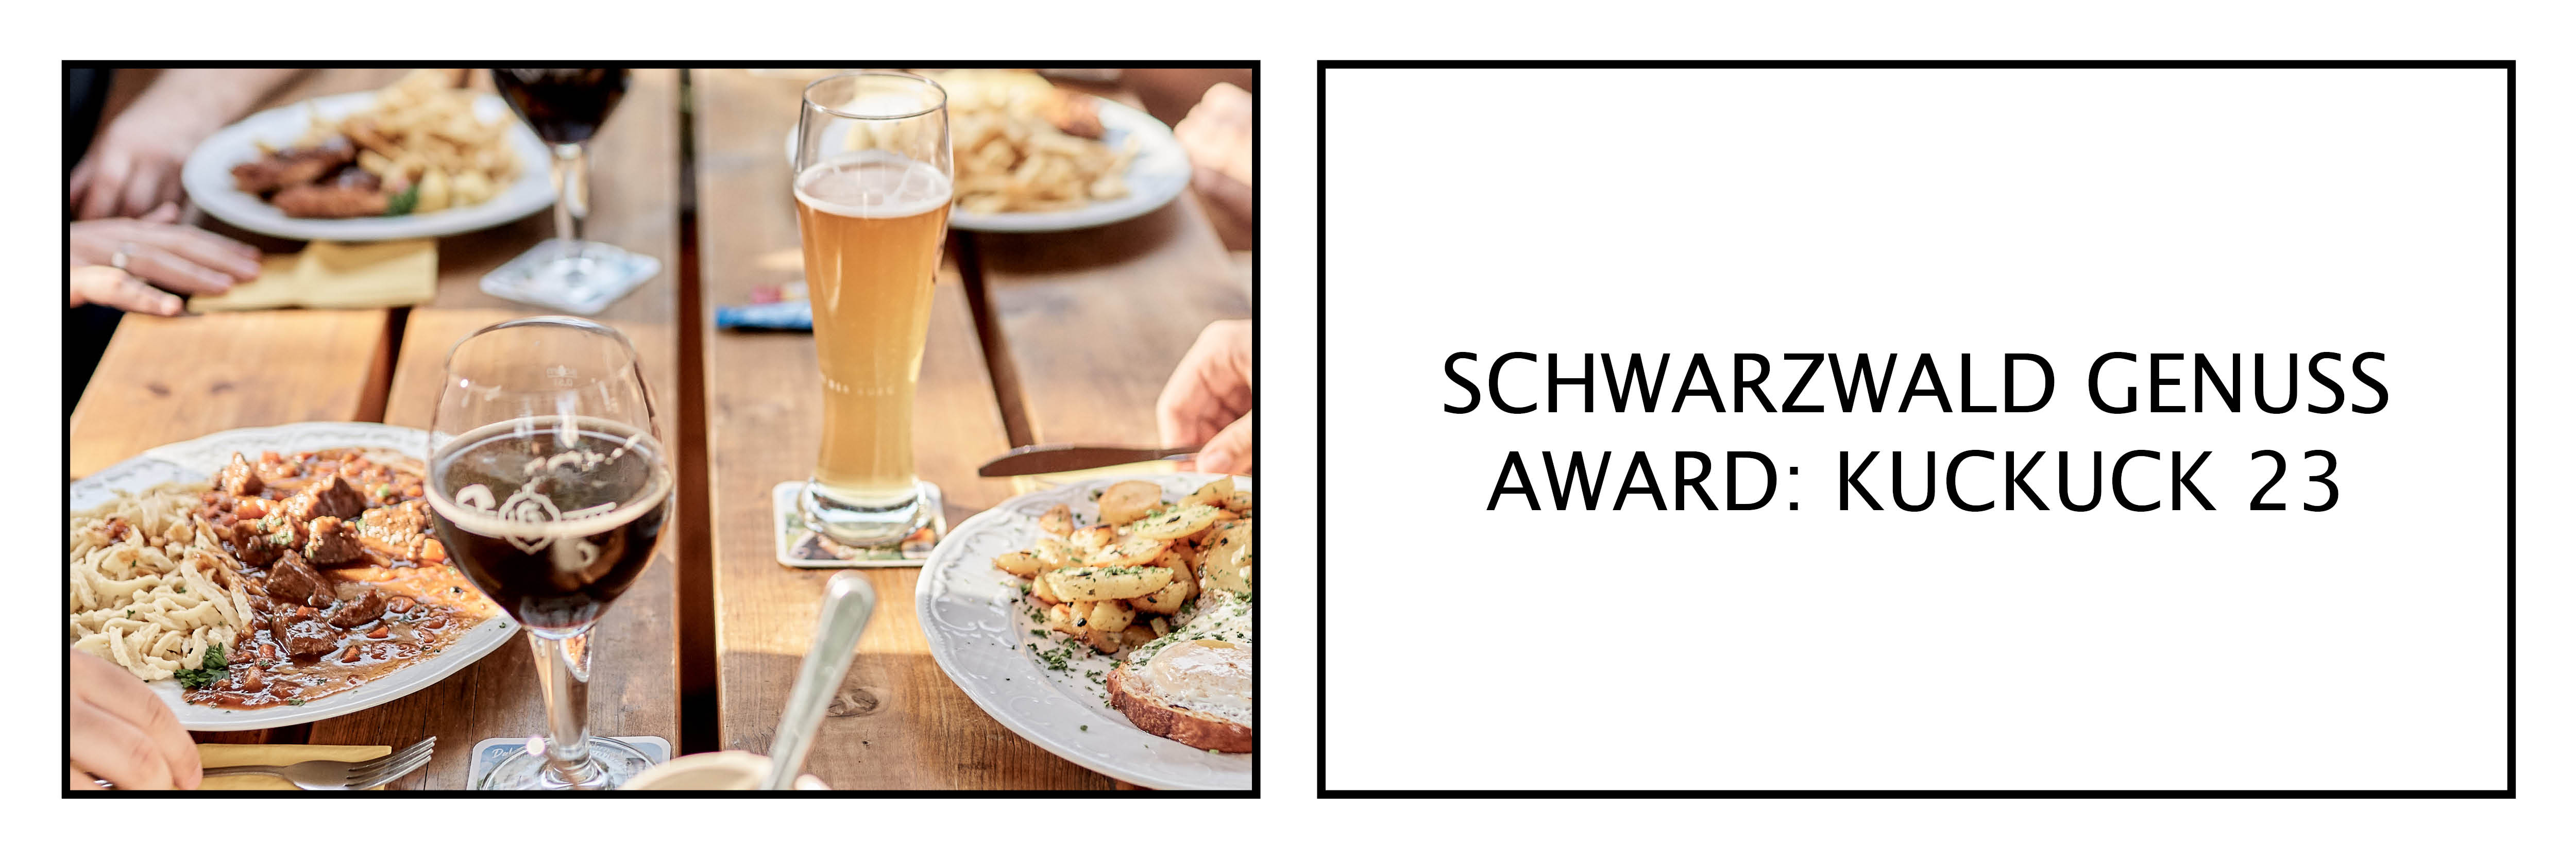 Schwearzwald Genuss Award: kuckuck 23